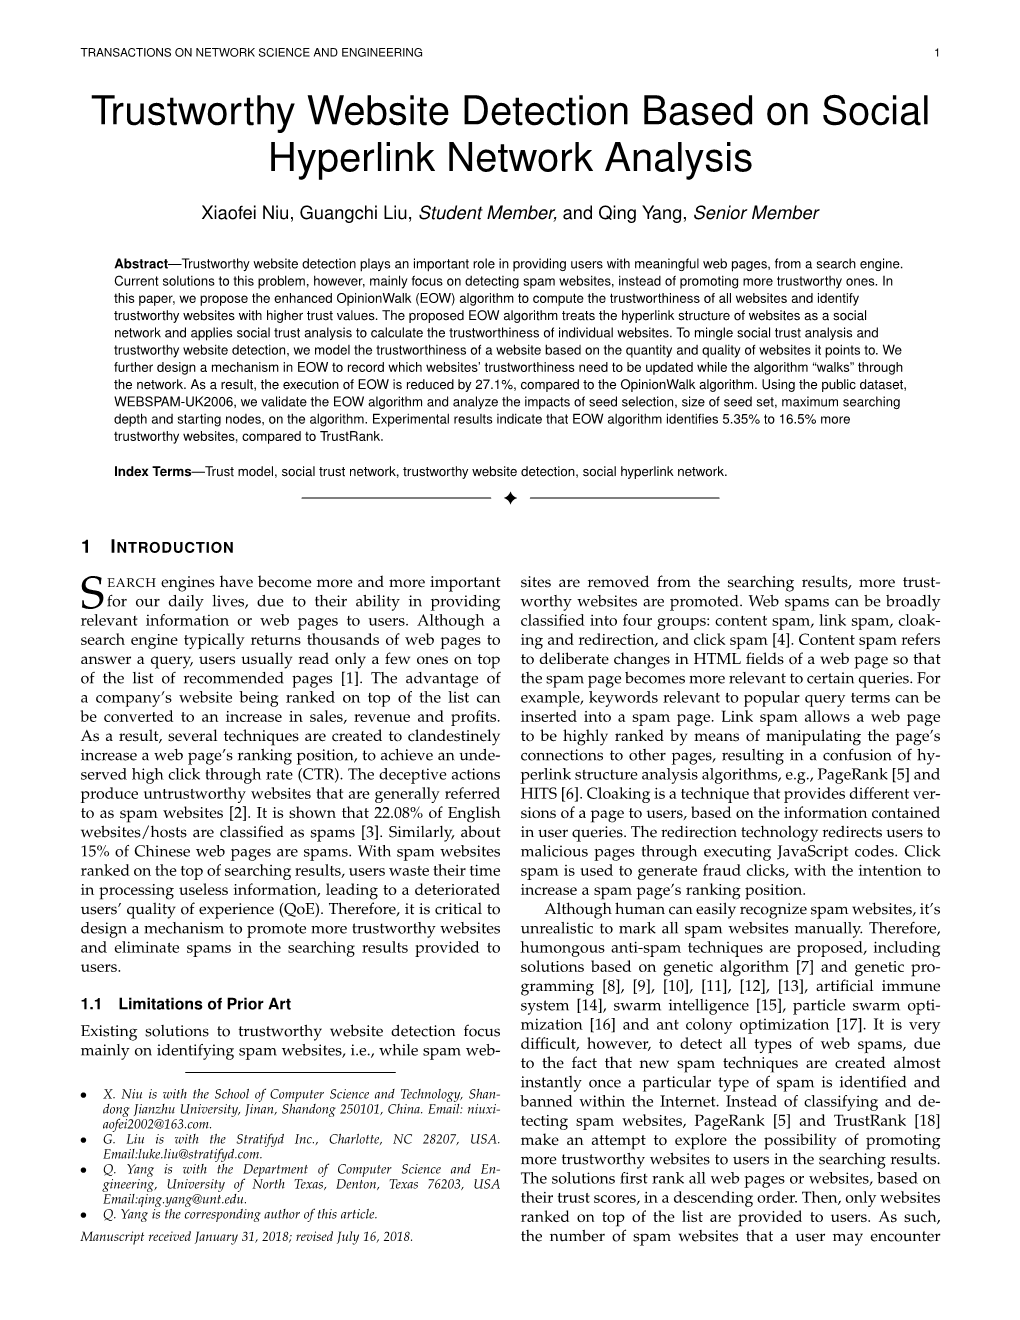 Trustworthy Website Detection Based on Social Hyperlink Network Analysis